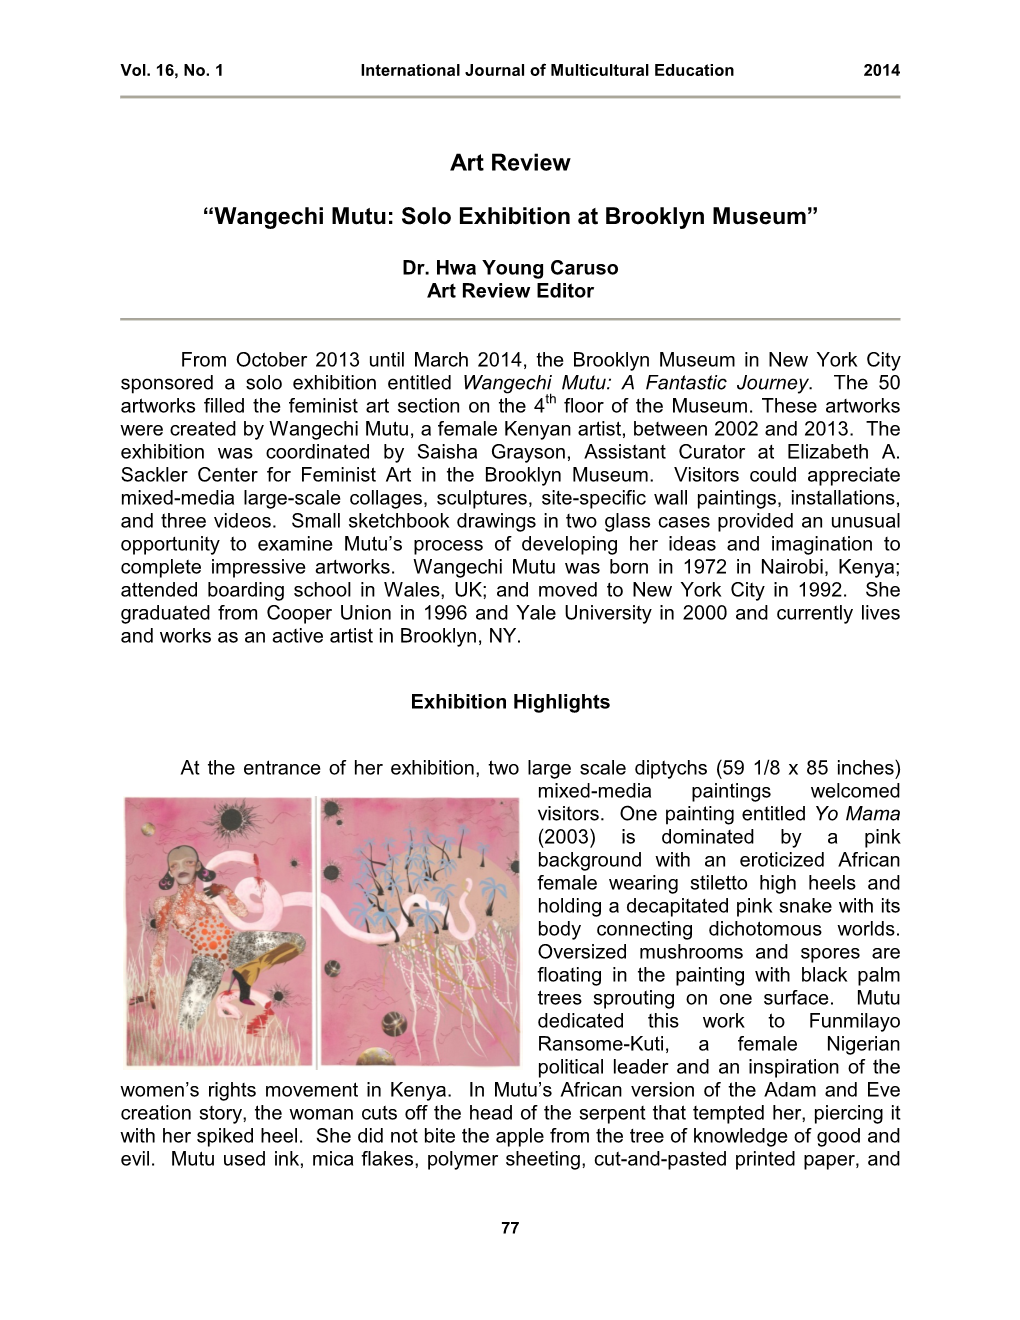 Art Review “Wangechi Mutu: Solo Exhibition at Brooklyn Museum”